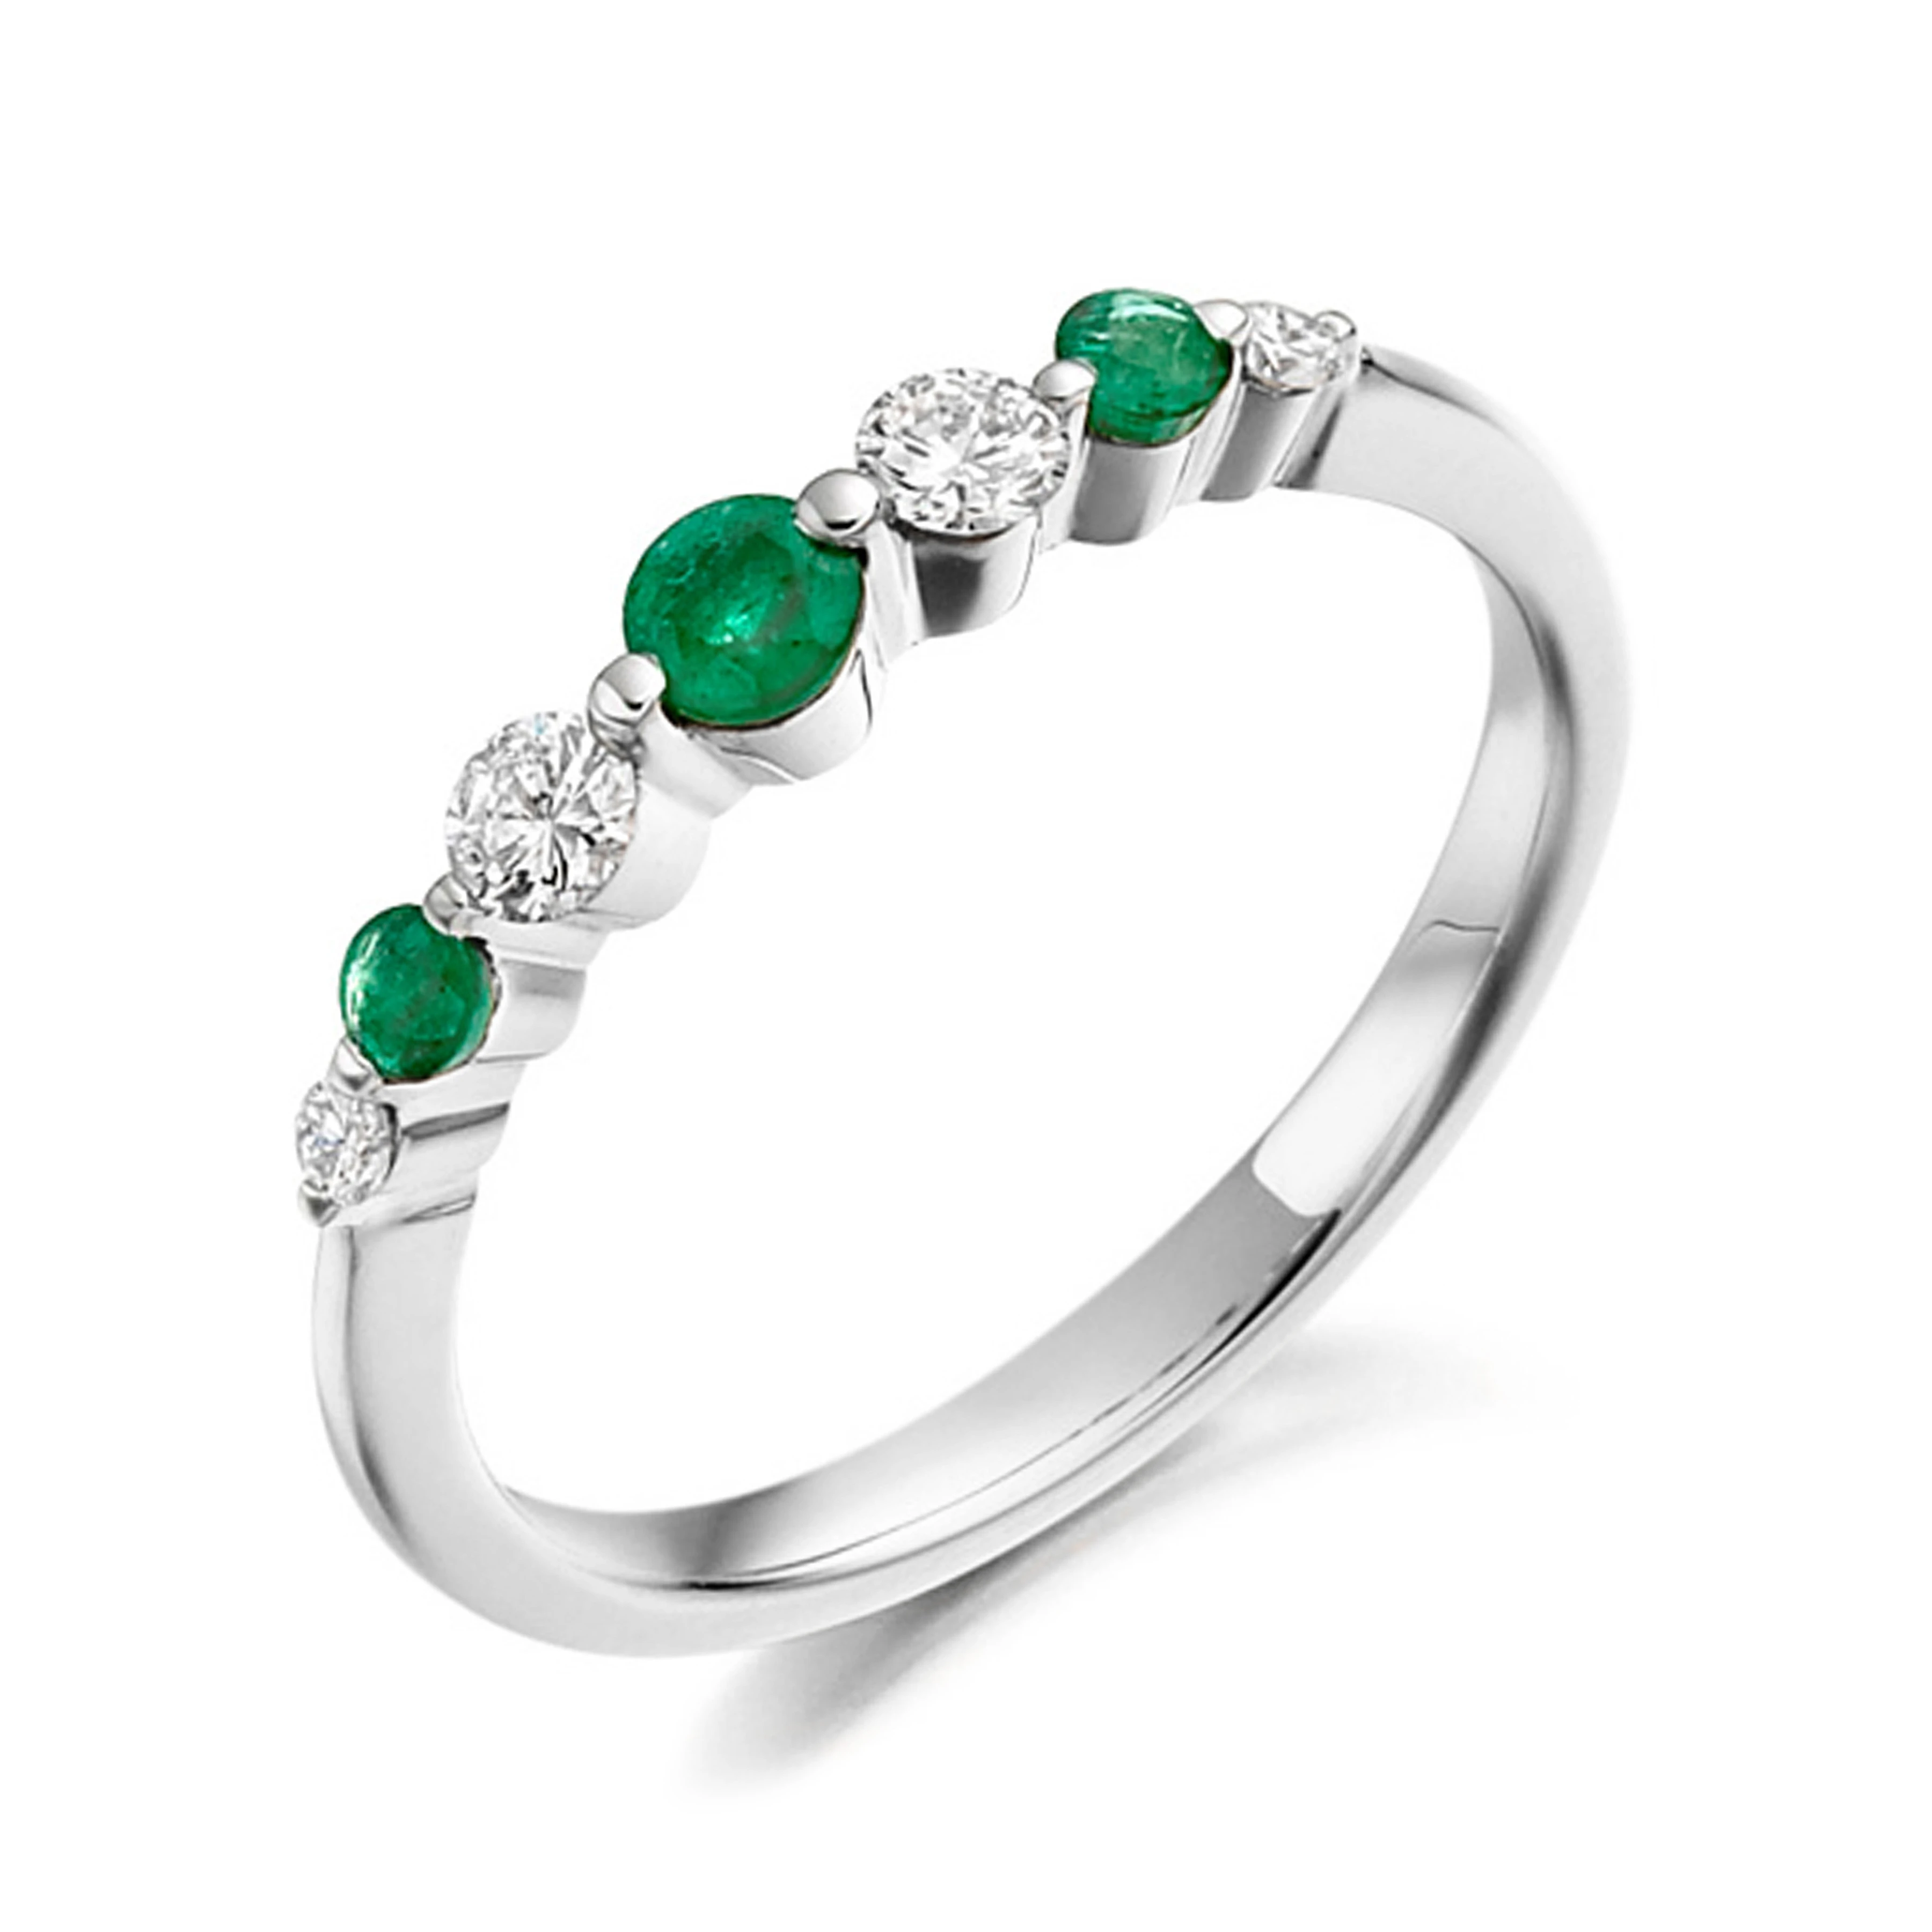 4mm,3mm Round Emerald Seven Stone Diamond And Gemstone Ring